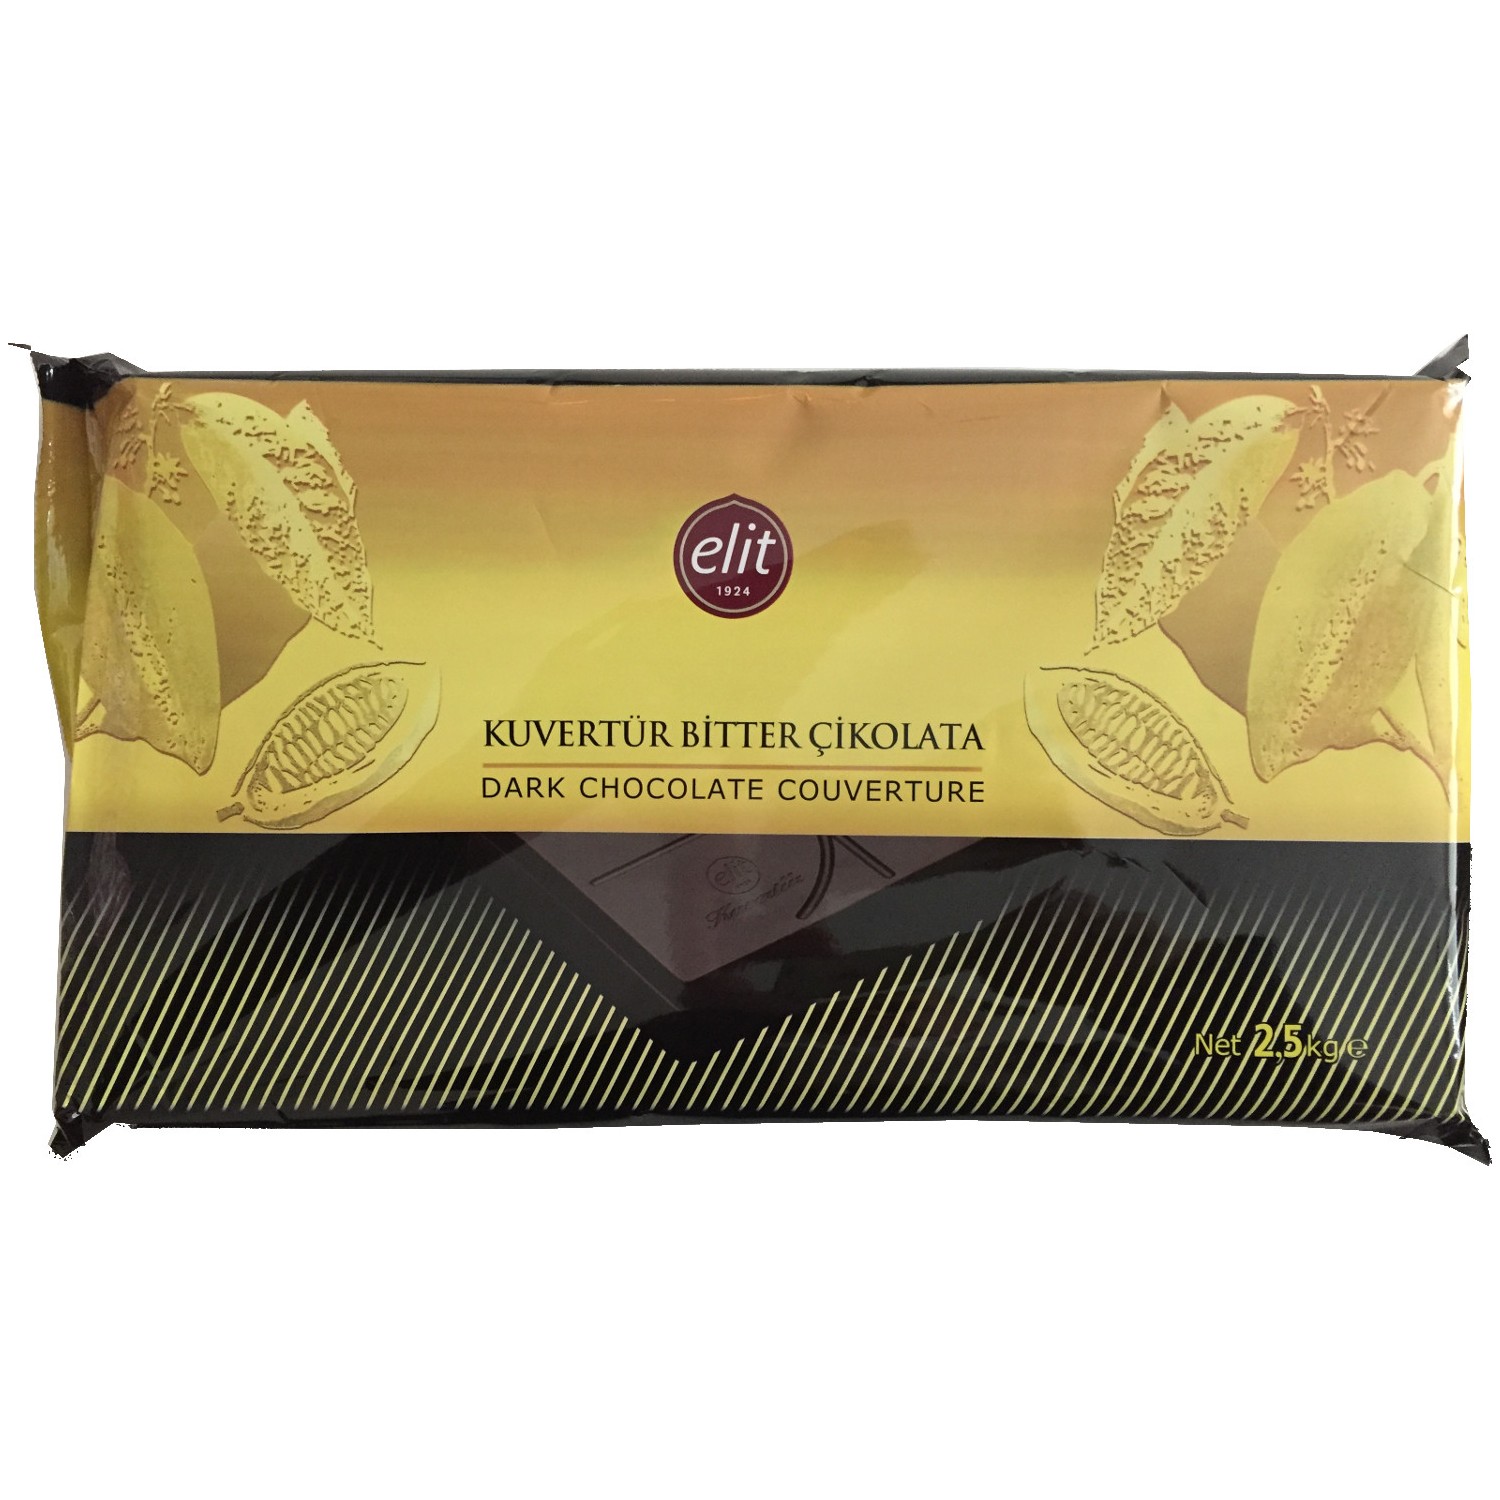 Elitparti Elit Kuvertür Bitter Çikolata (2.5 Kg) Fiyatı